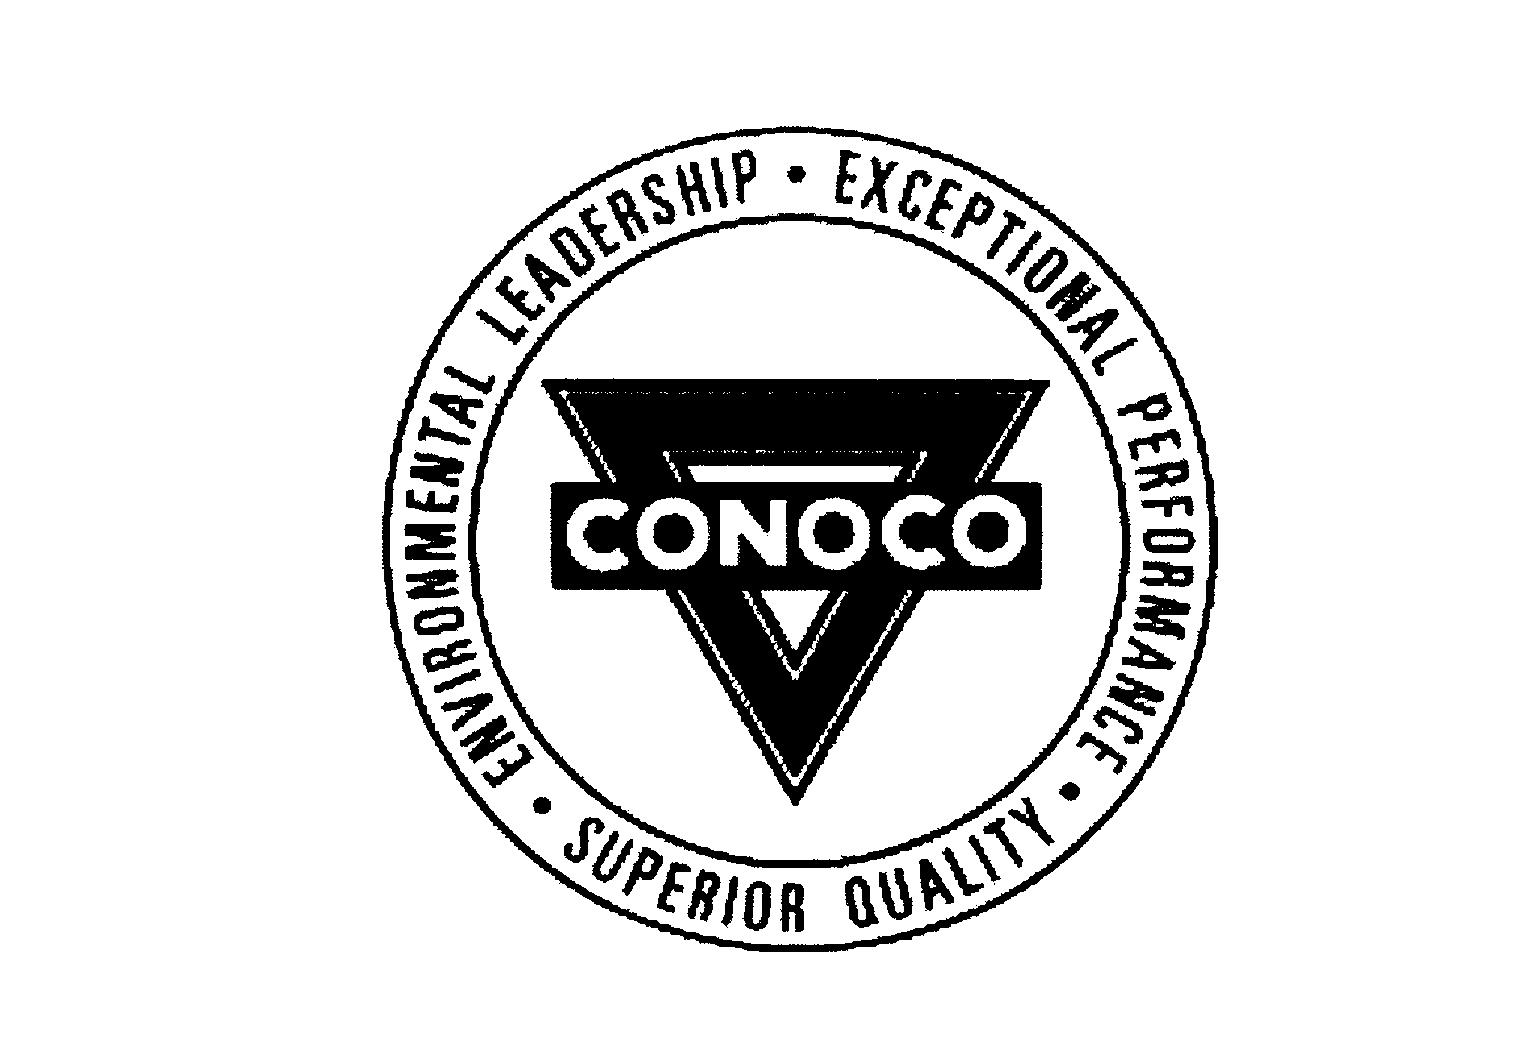  CONOCO ENVIRONMENTAL LEADERSHIP EXCEPTIONAL PERFORMANCE SUPERIOR QUALITY